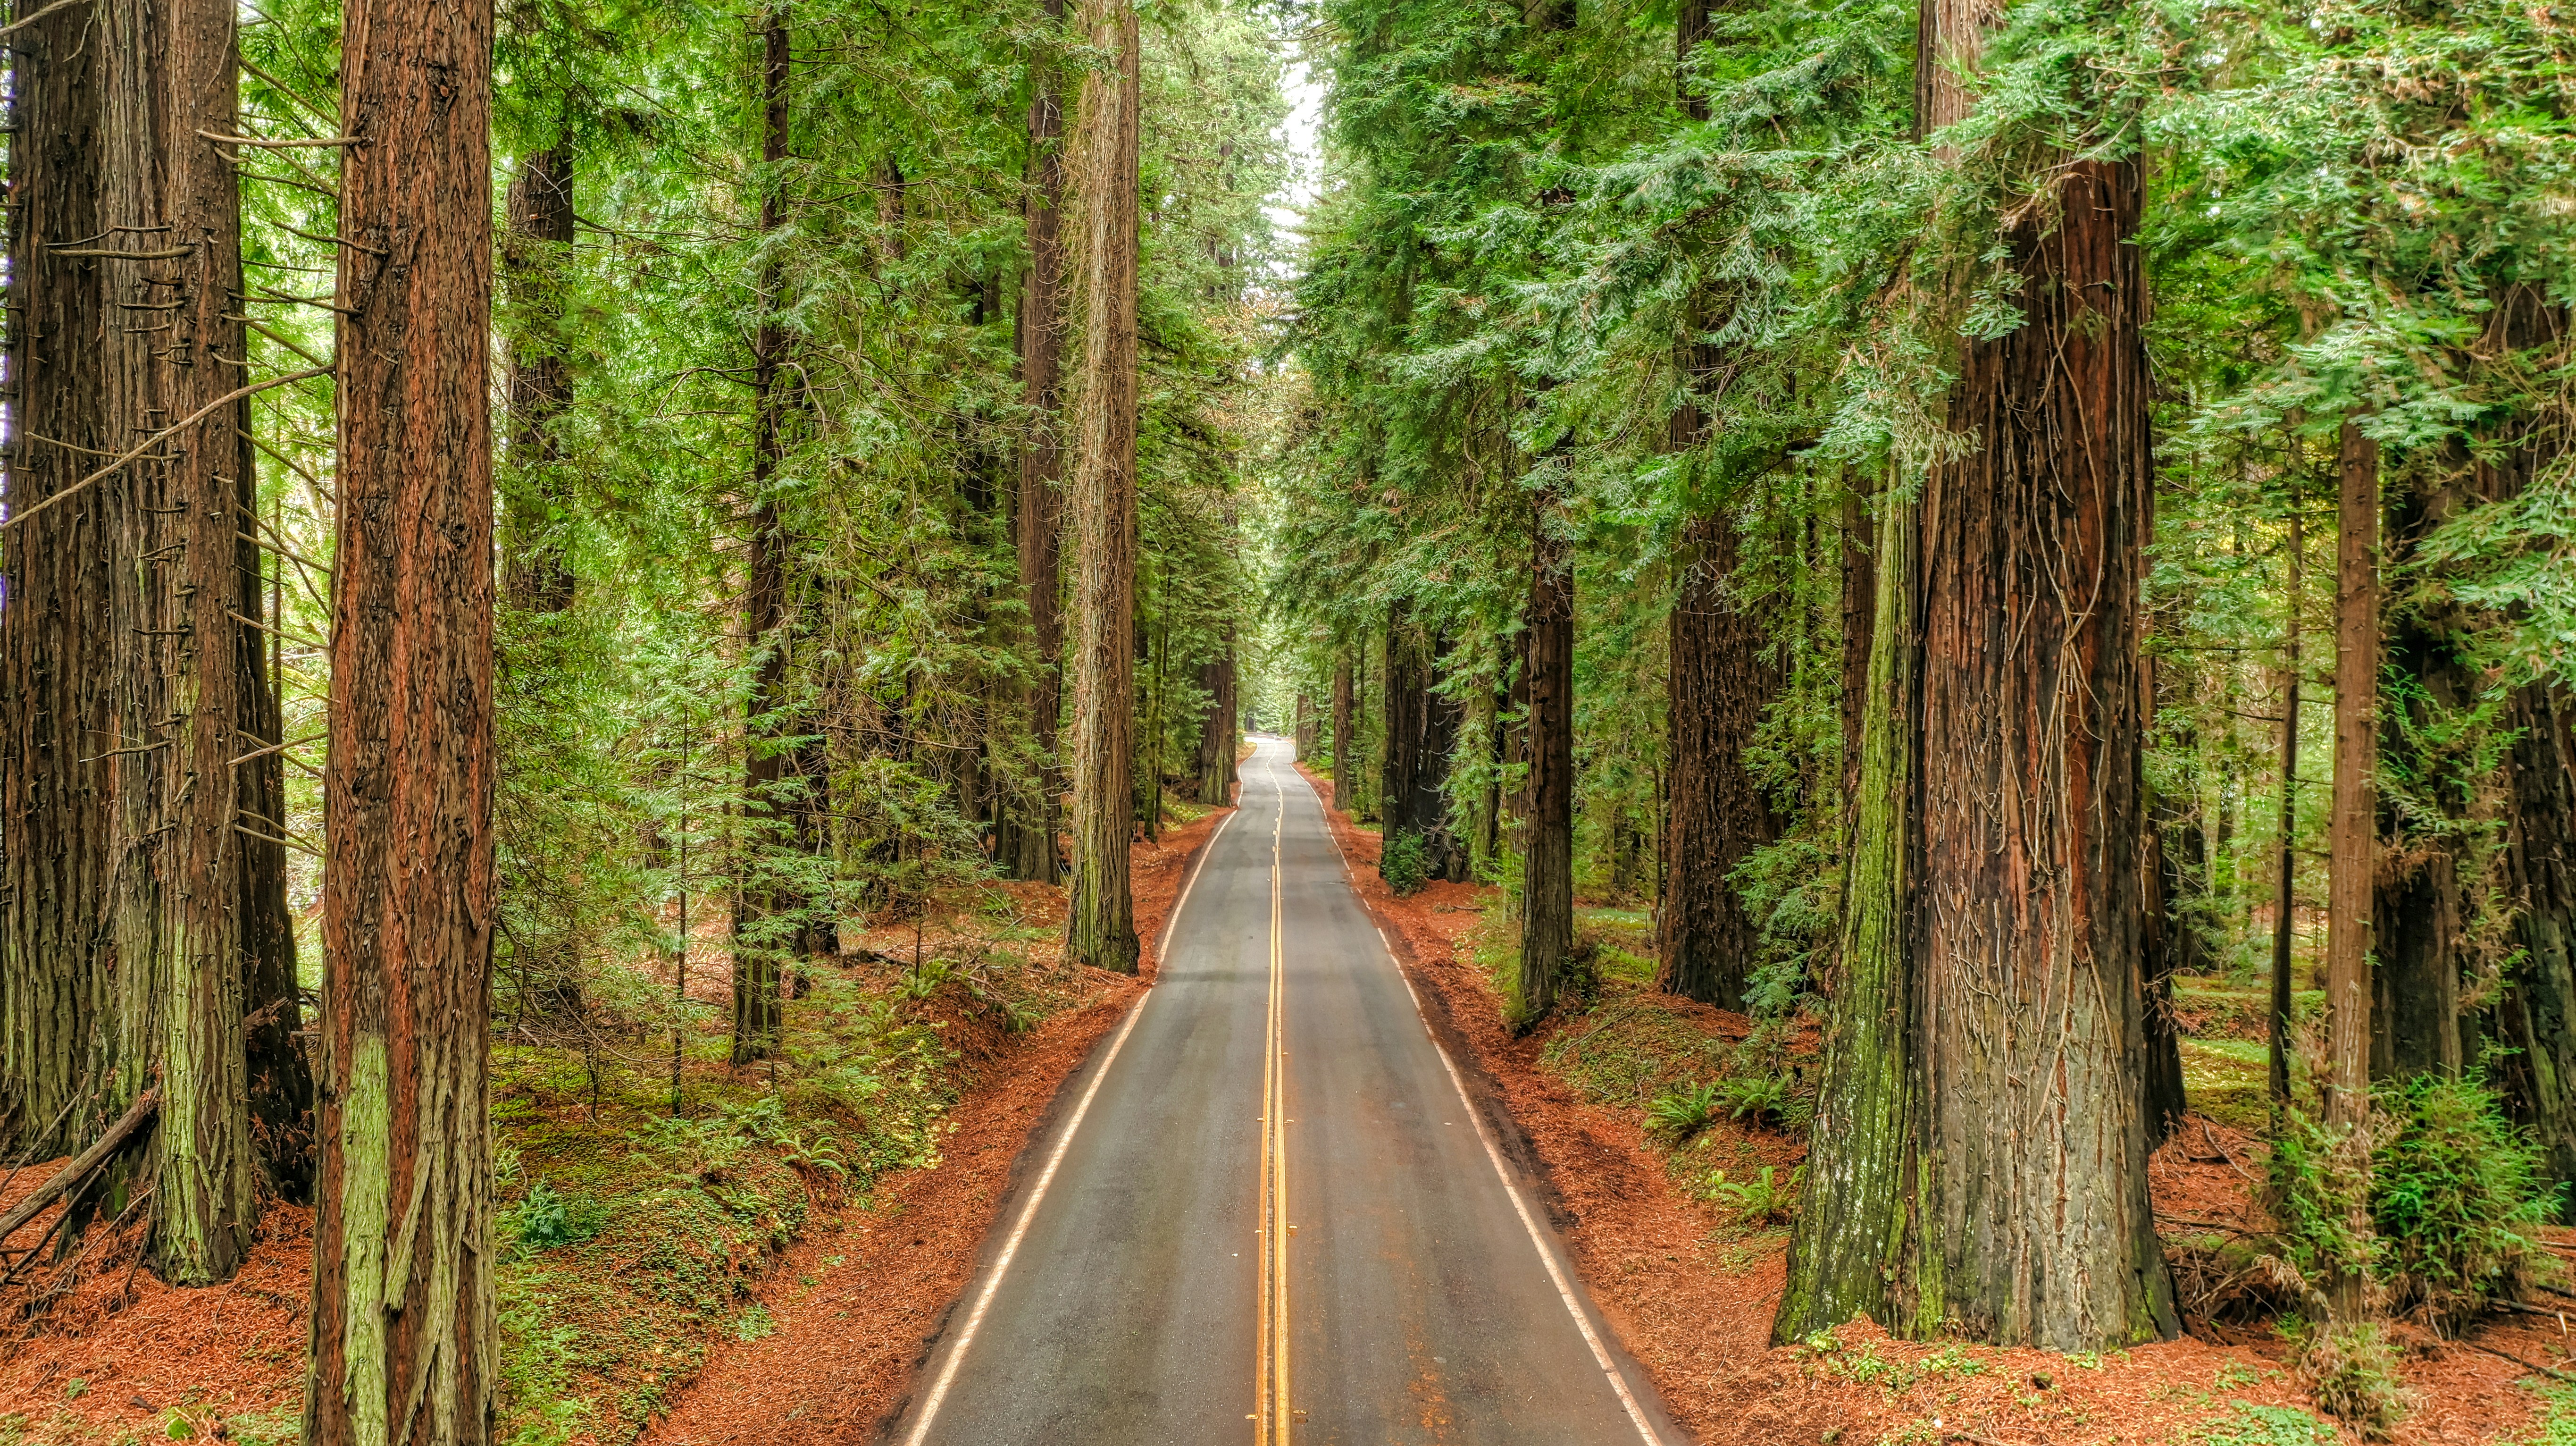 Nature Trees Road Asphalt Grass Plants Fallen Leaves Forest Redwood The Avenue Of The Giants Califor 5460x3064